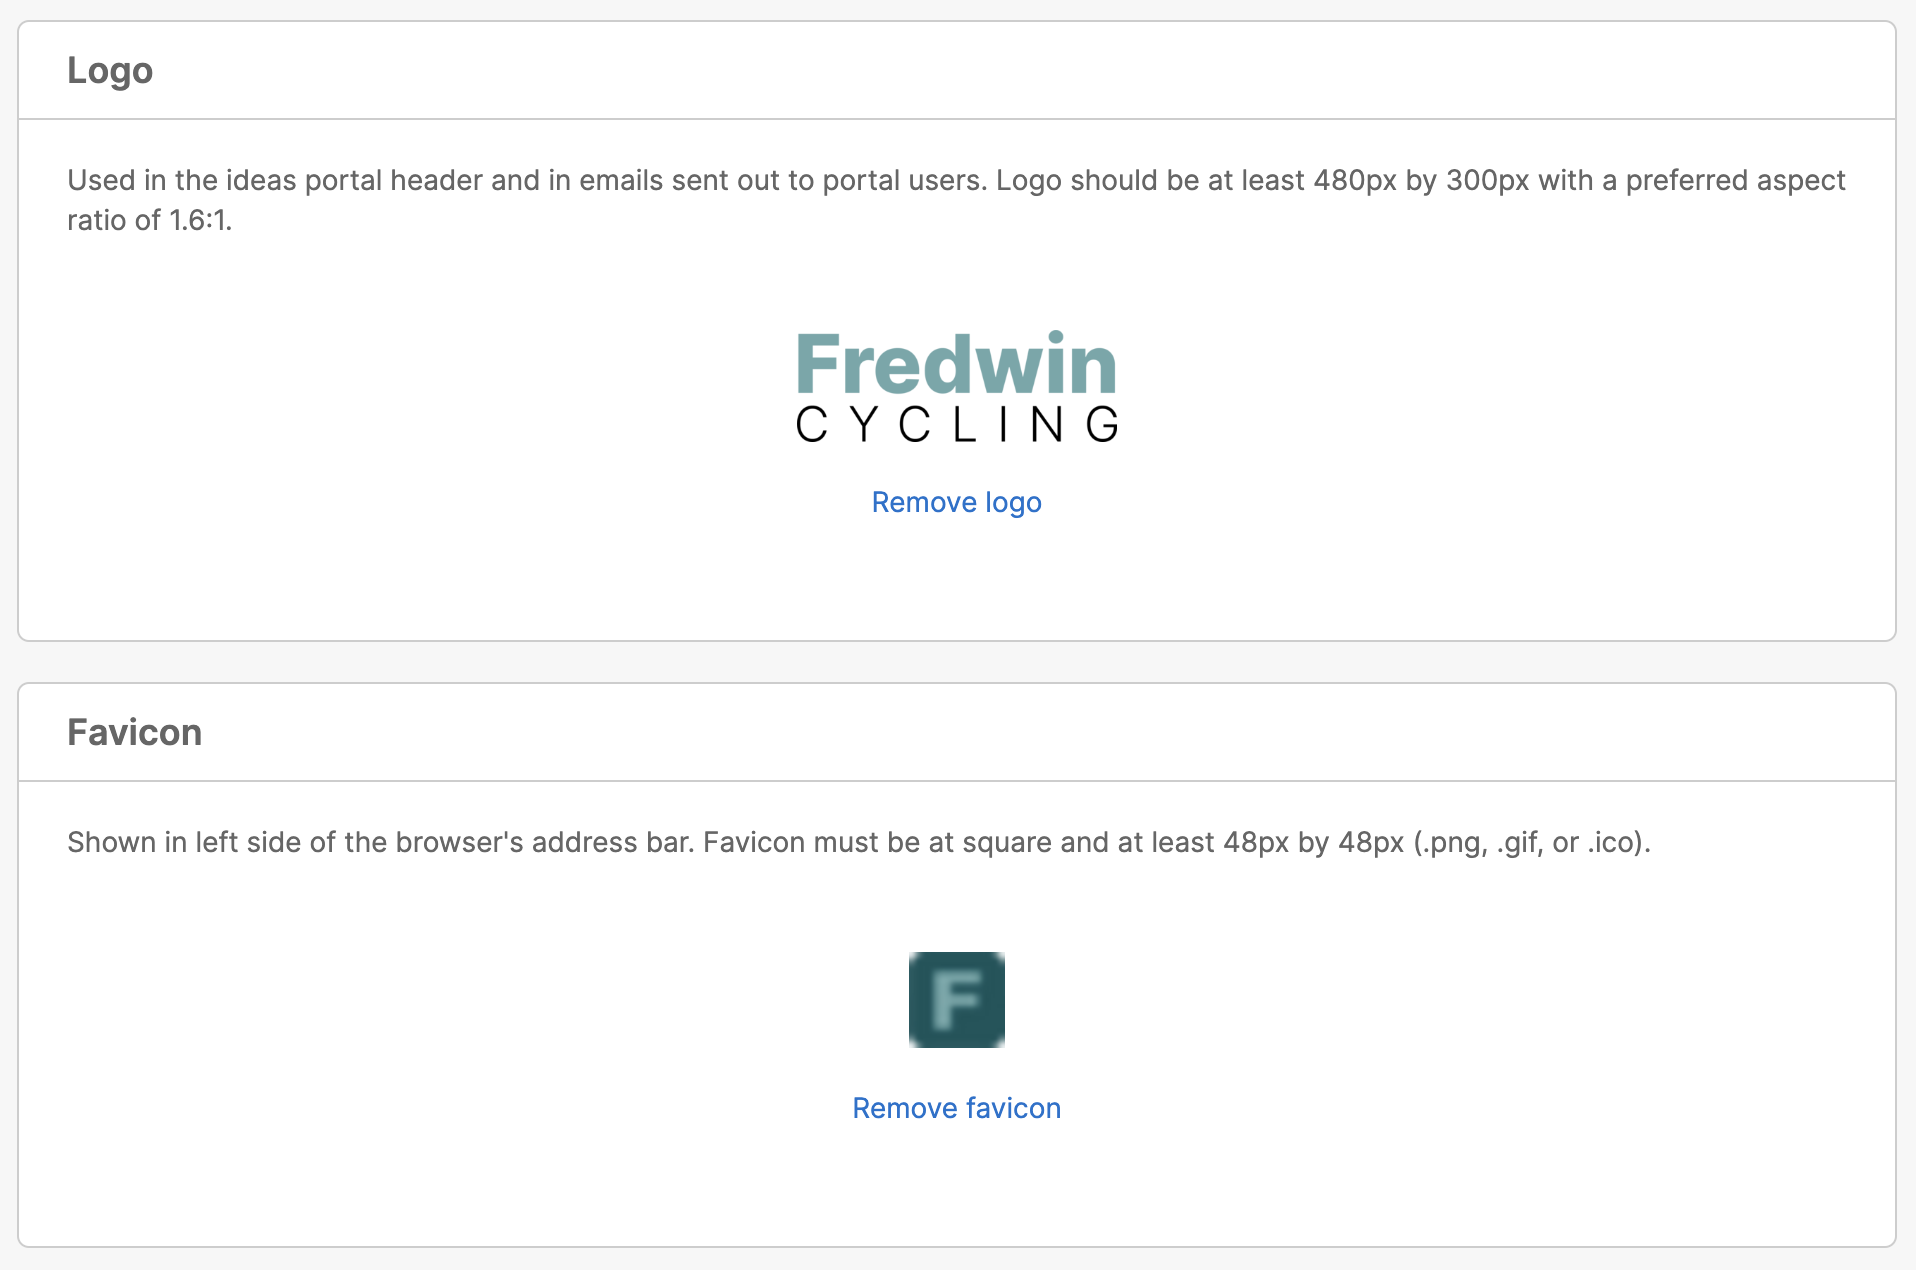 Fredwin Cycling logo and favicon